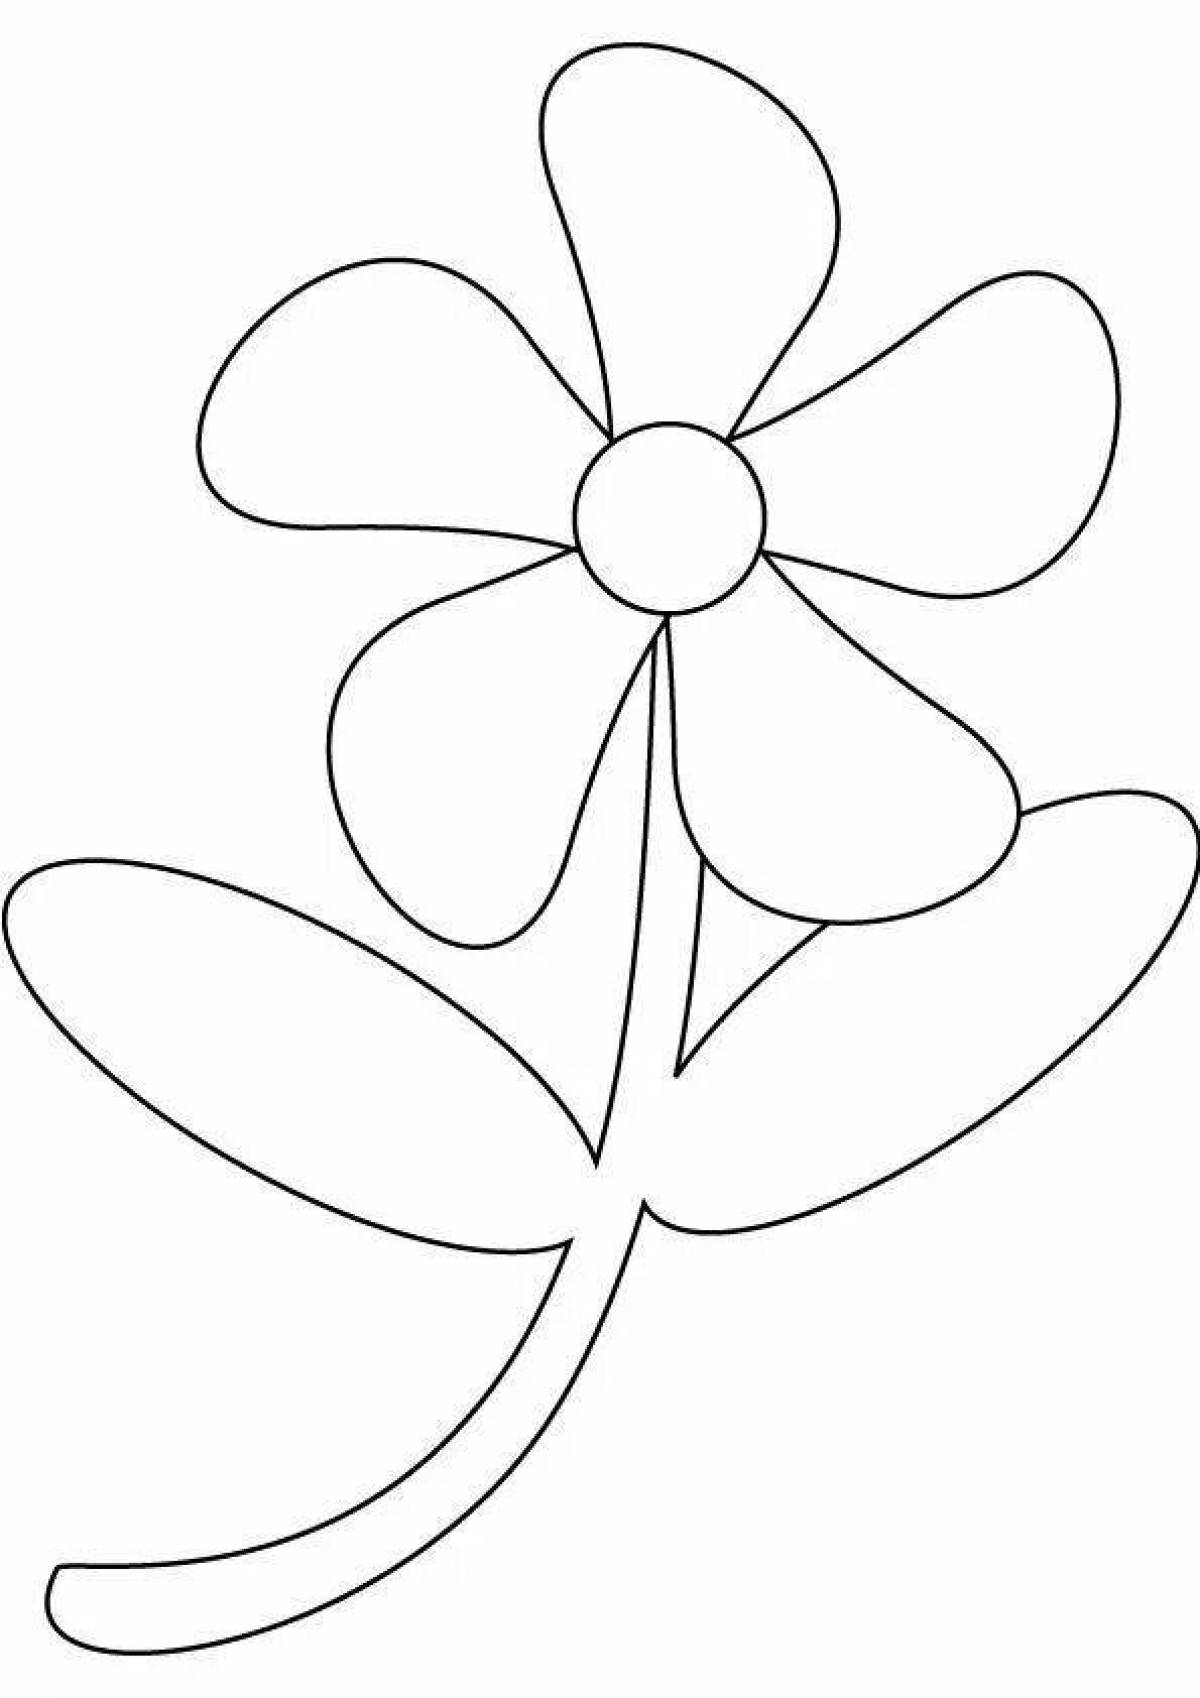 Изысканная страница раскраски цветок с семью цветами шаблон